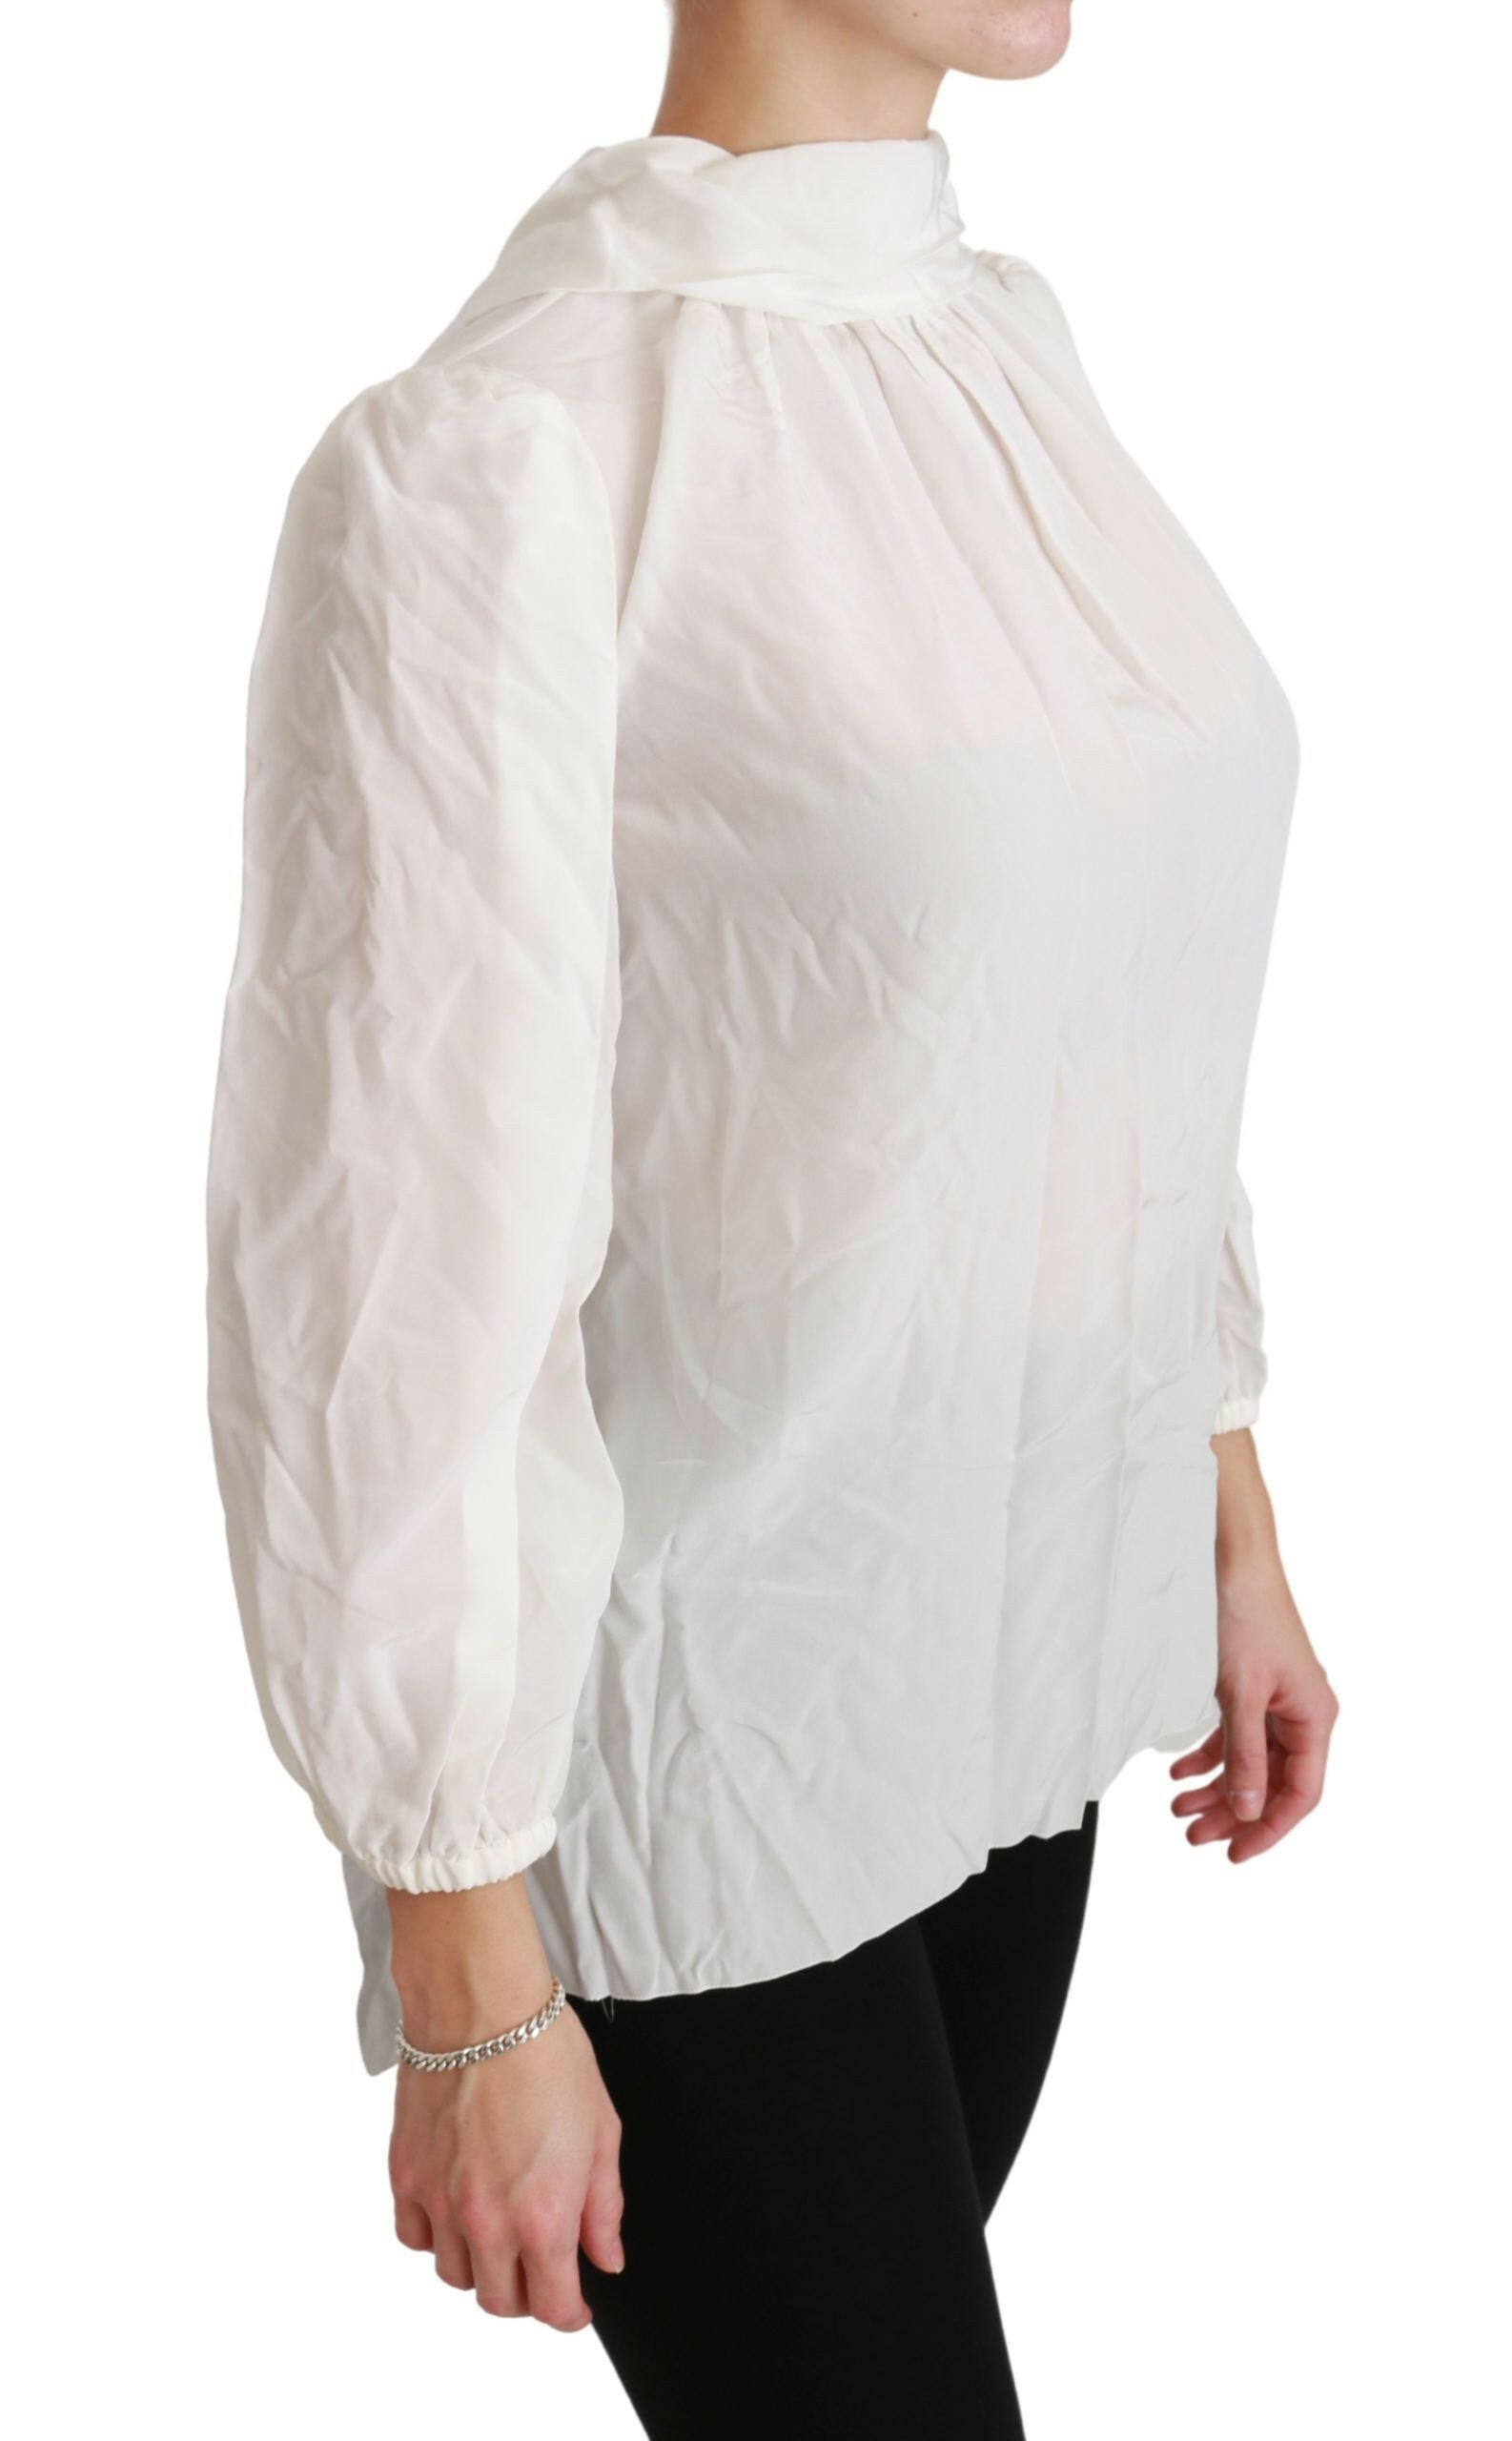 Dolce & Gabbana White Turtle Neck Blouse Shirt Silk Top - GENUINE AUTHENTIC BRAND LLC  